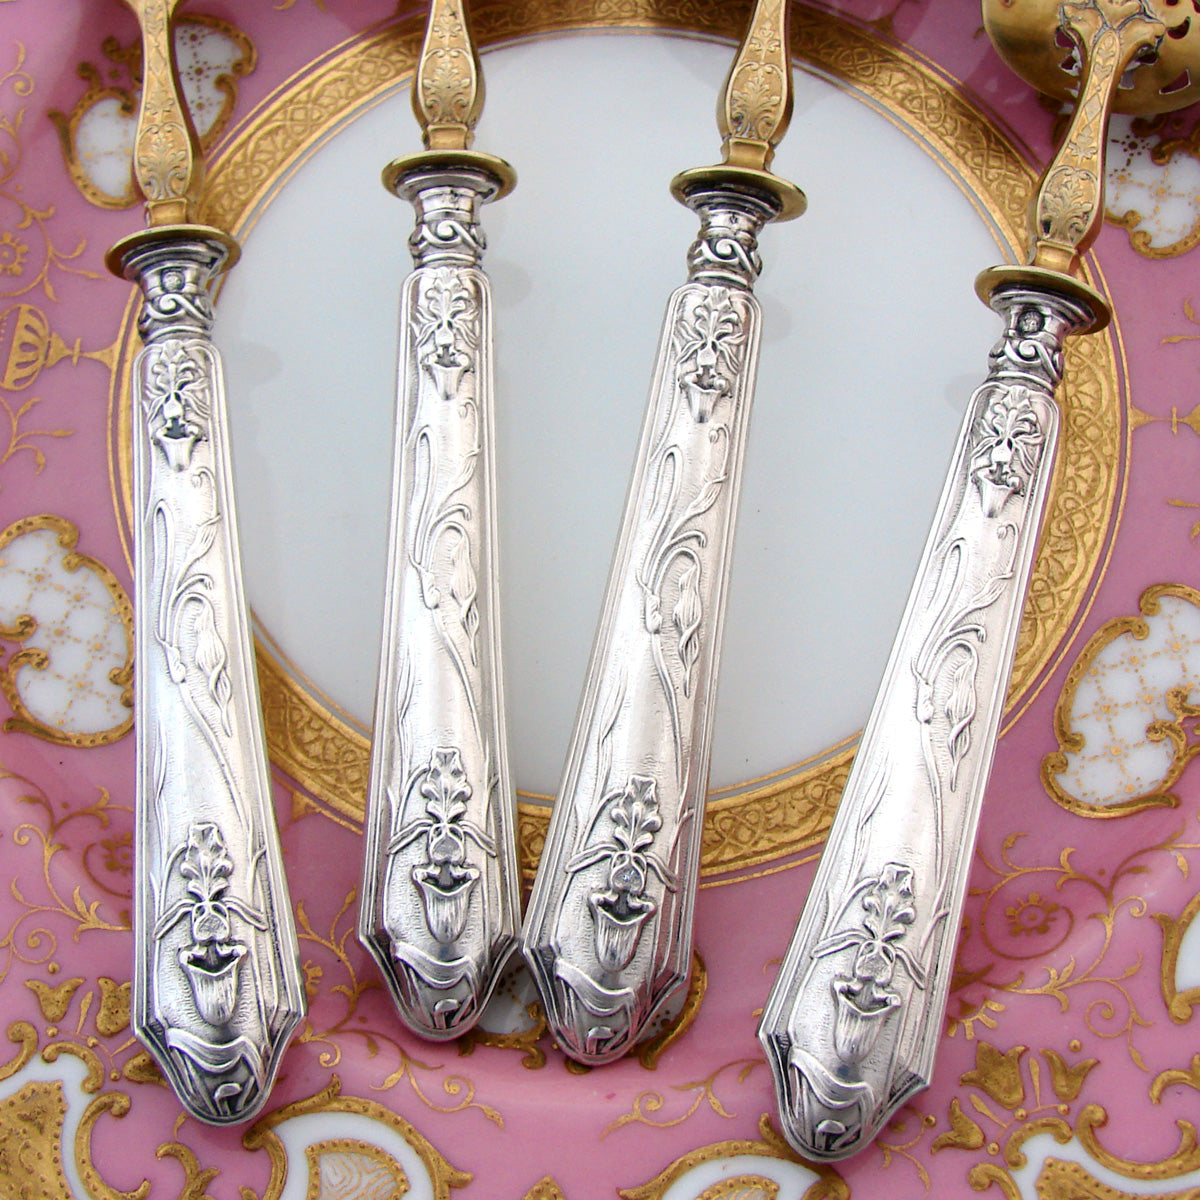 Antique French Sterling Silver 4pc Condiment or Hors d'Oeuvre Service Set, Art Nouveau Floral